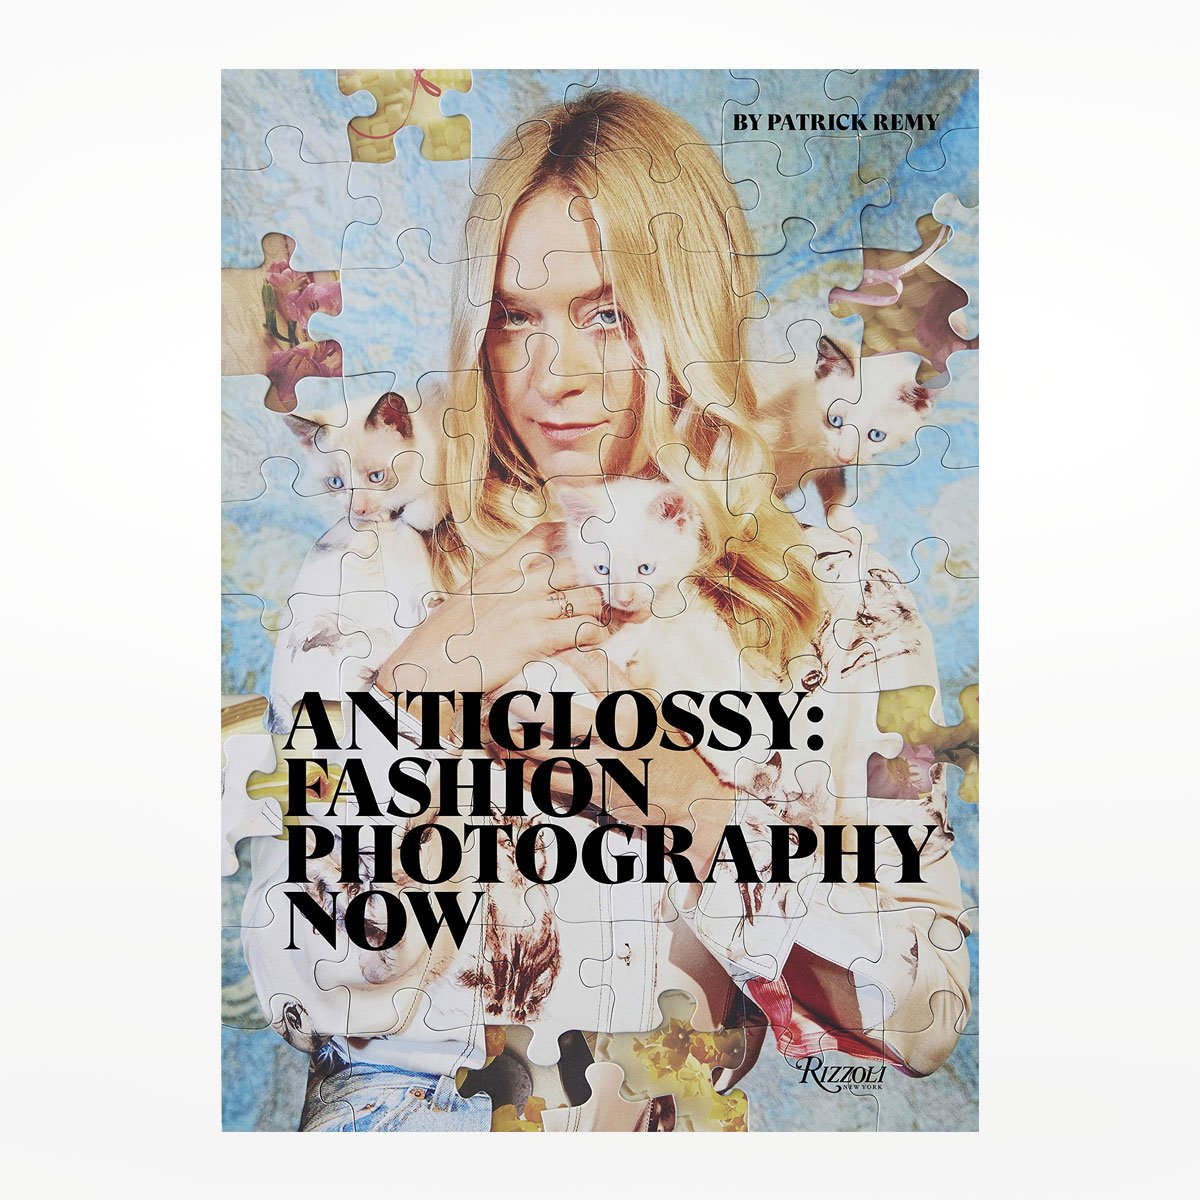 AntiGlossy: Fashion Photography Now